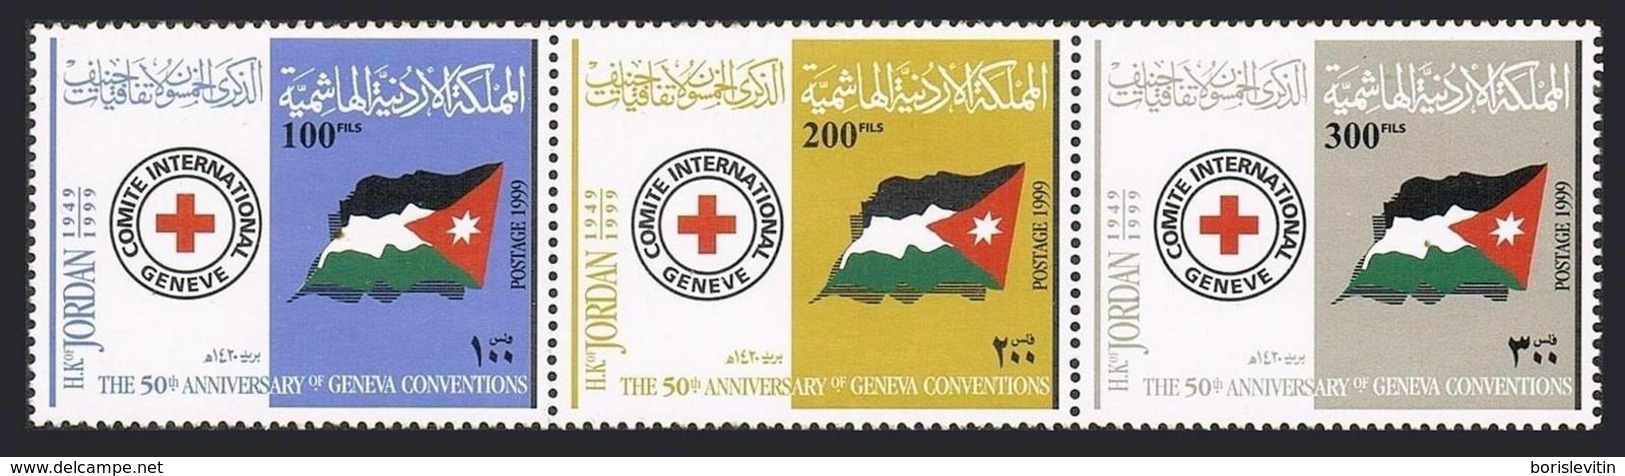 Jordan 1675 Ac Strip,MNH. Geneva Convention,50th Ann.2000.Red Cross,flag. - Jordanië